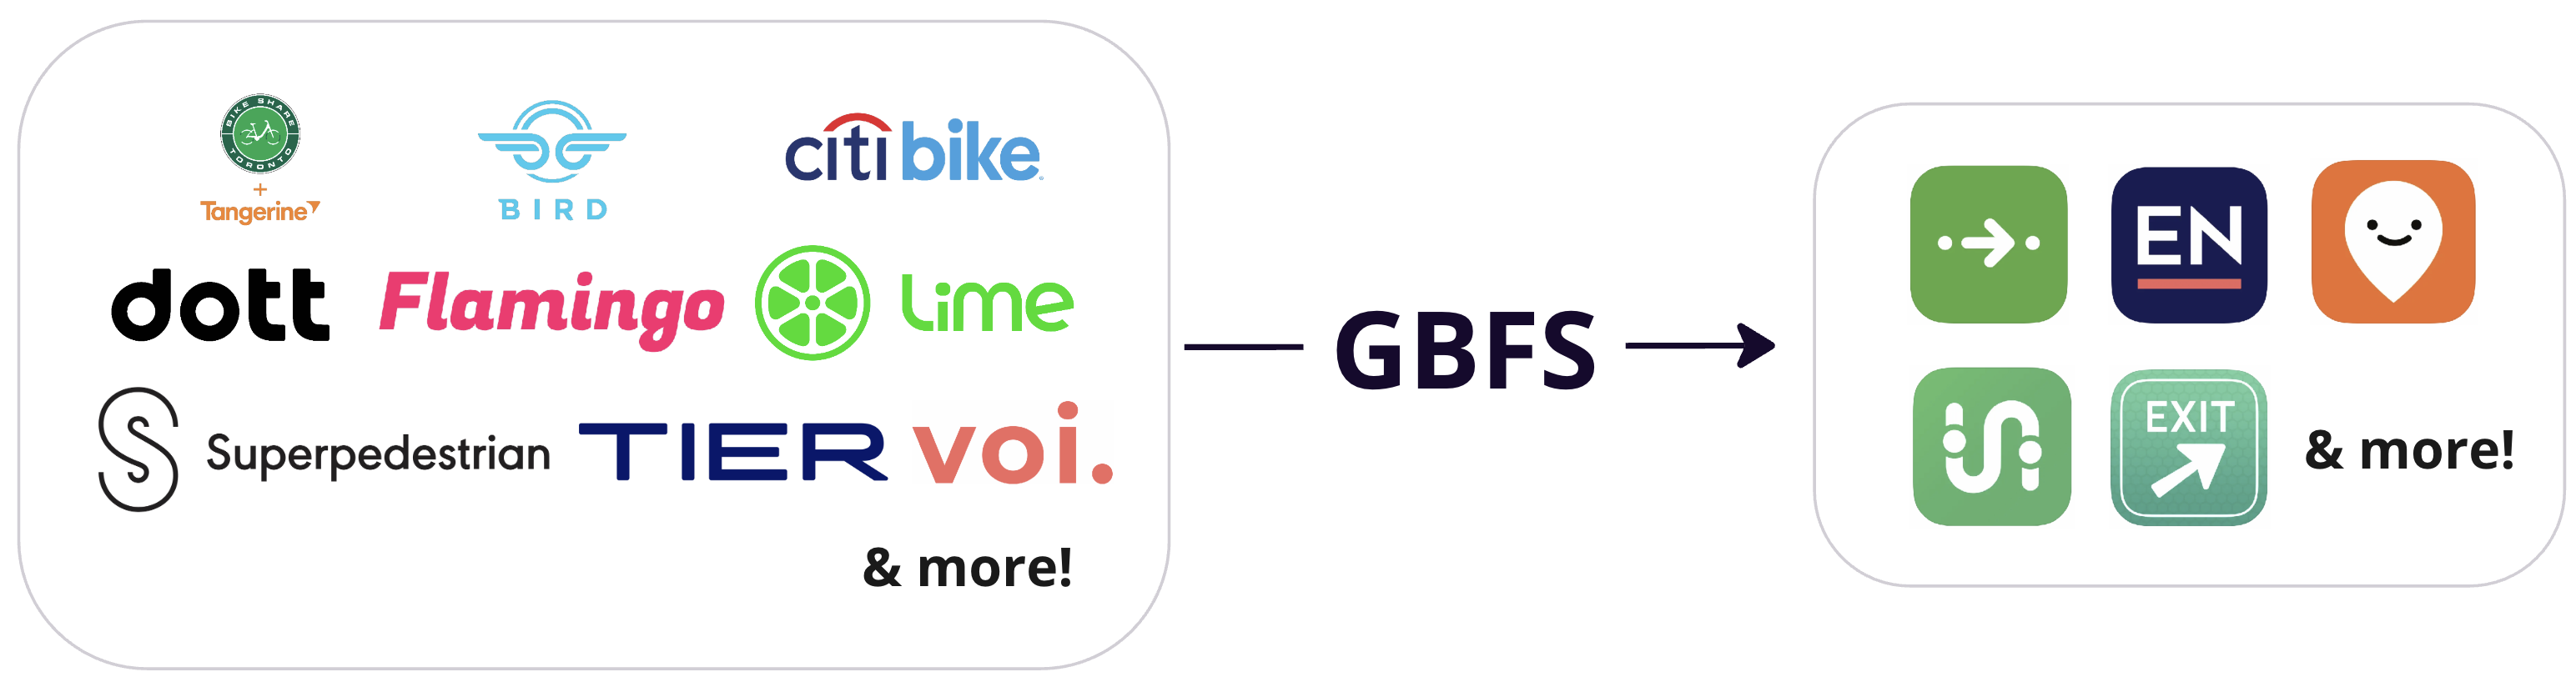 GBFS producer consumer logos